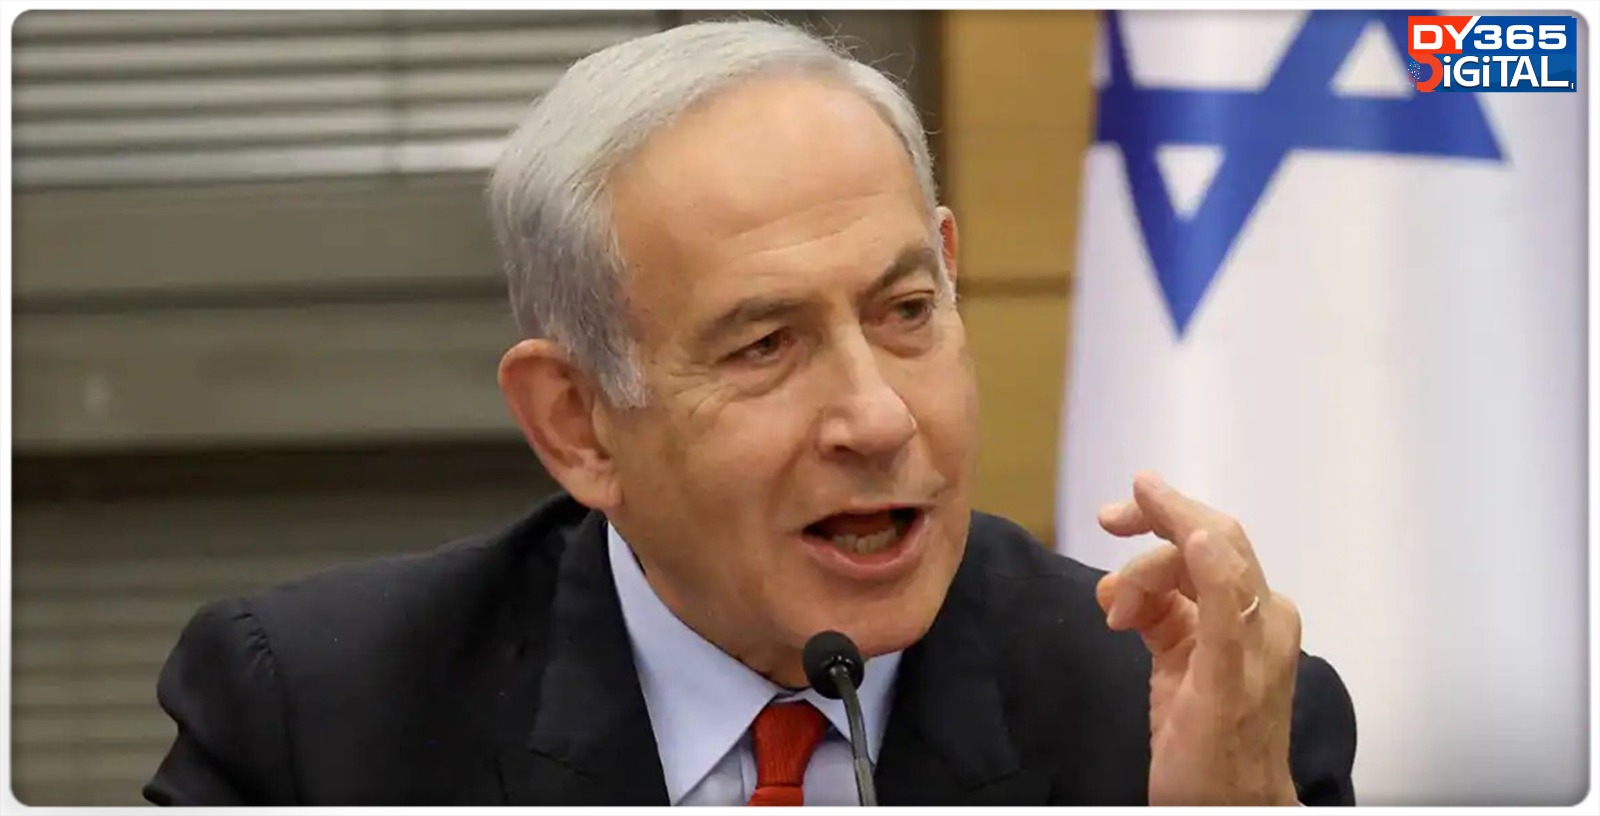 israel-war-cabinet-minister-quits-over-gaza-plan
